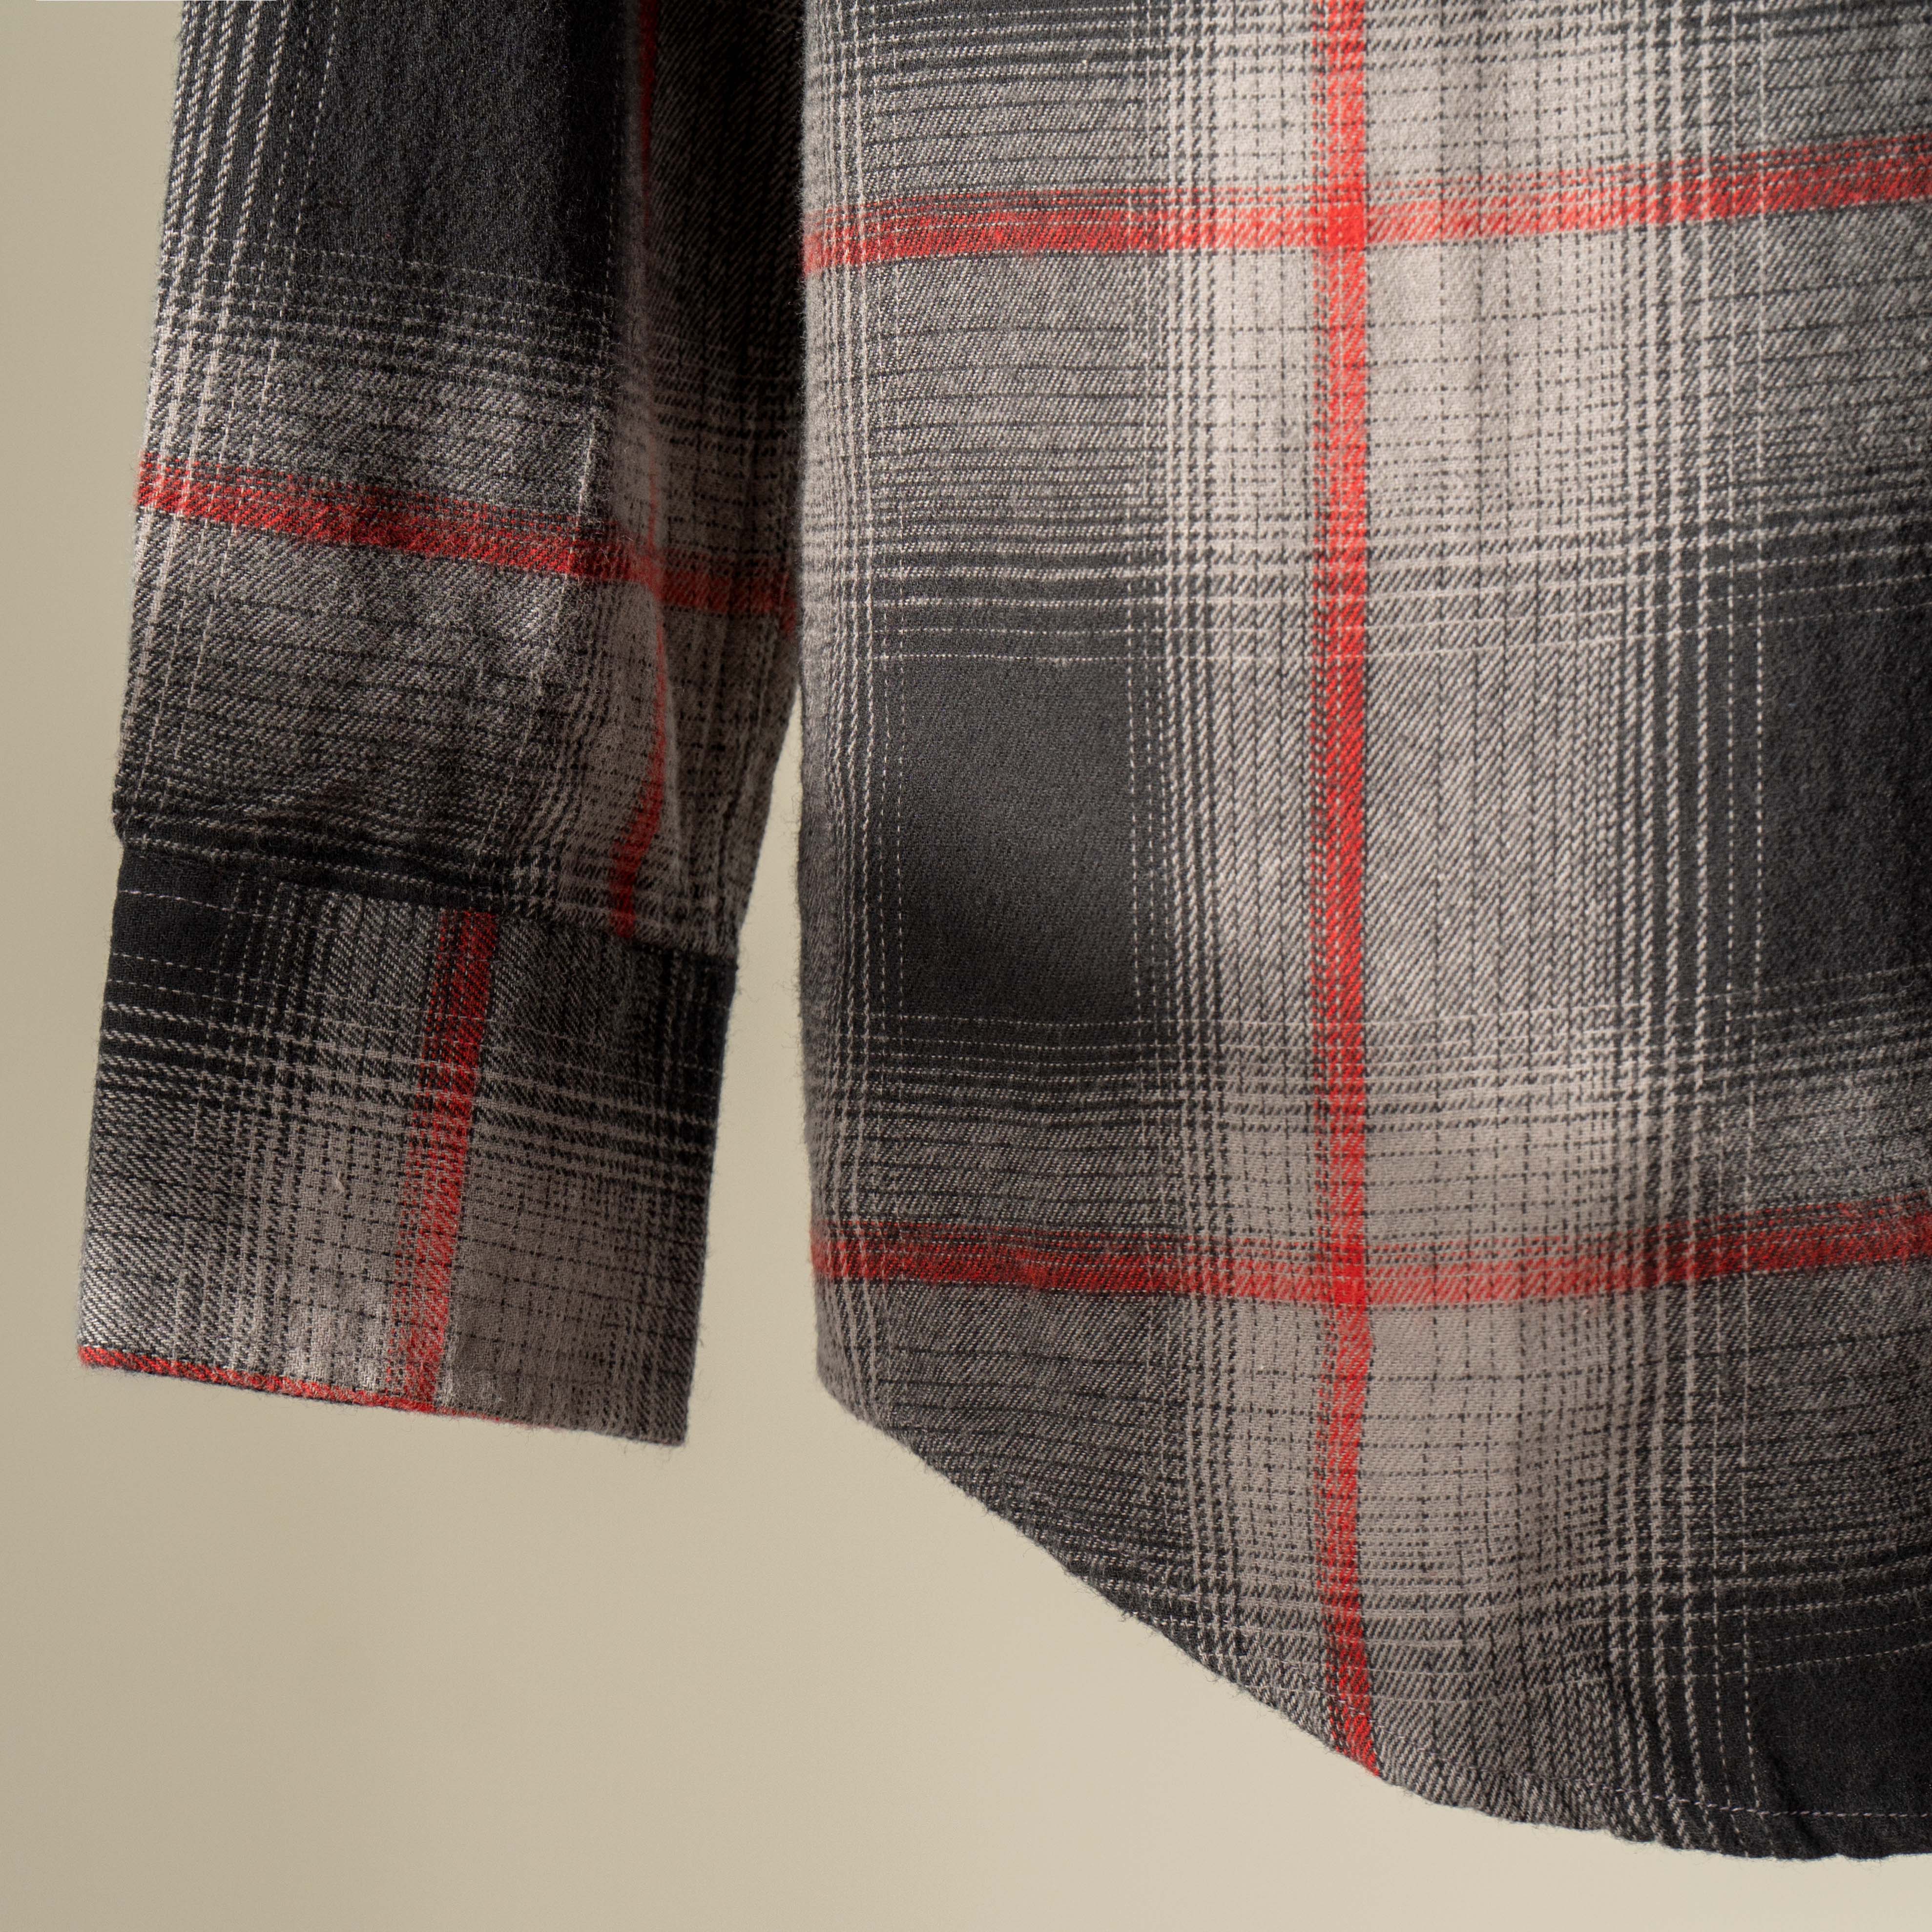 Áo Sơ Mi Nam Cao Cấp Flannel Xám Đỏ BY COTTON